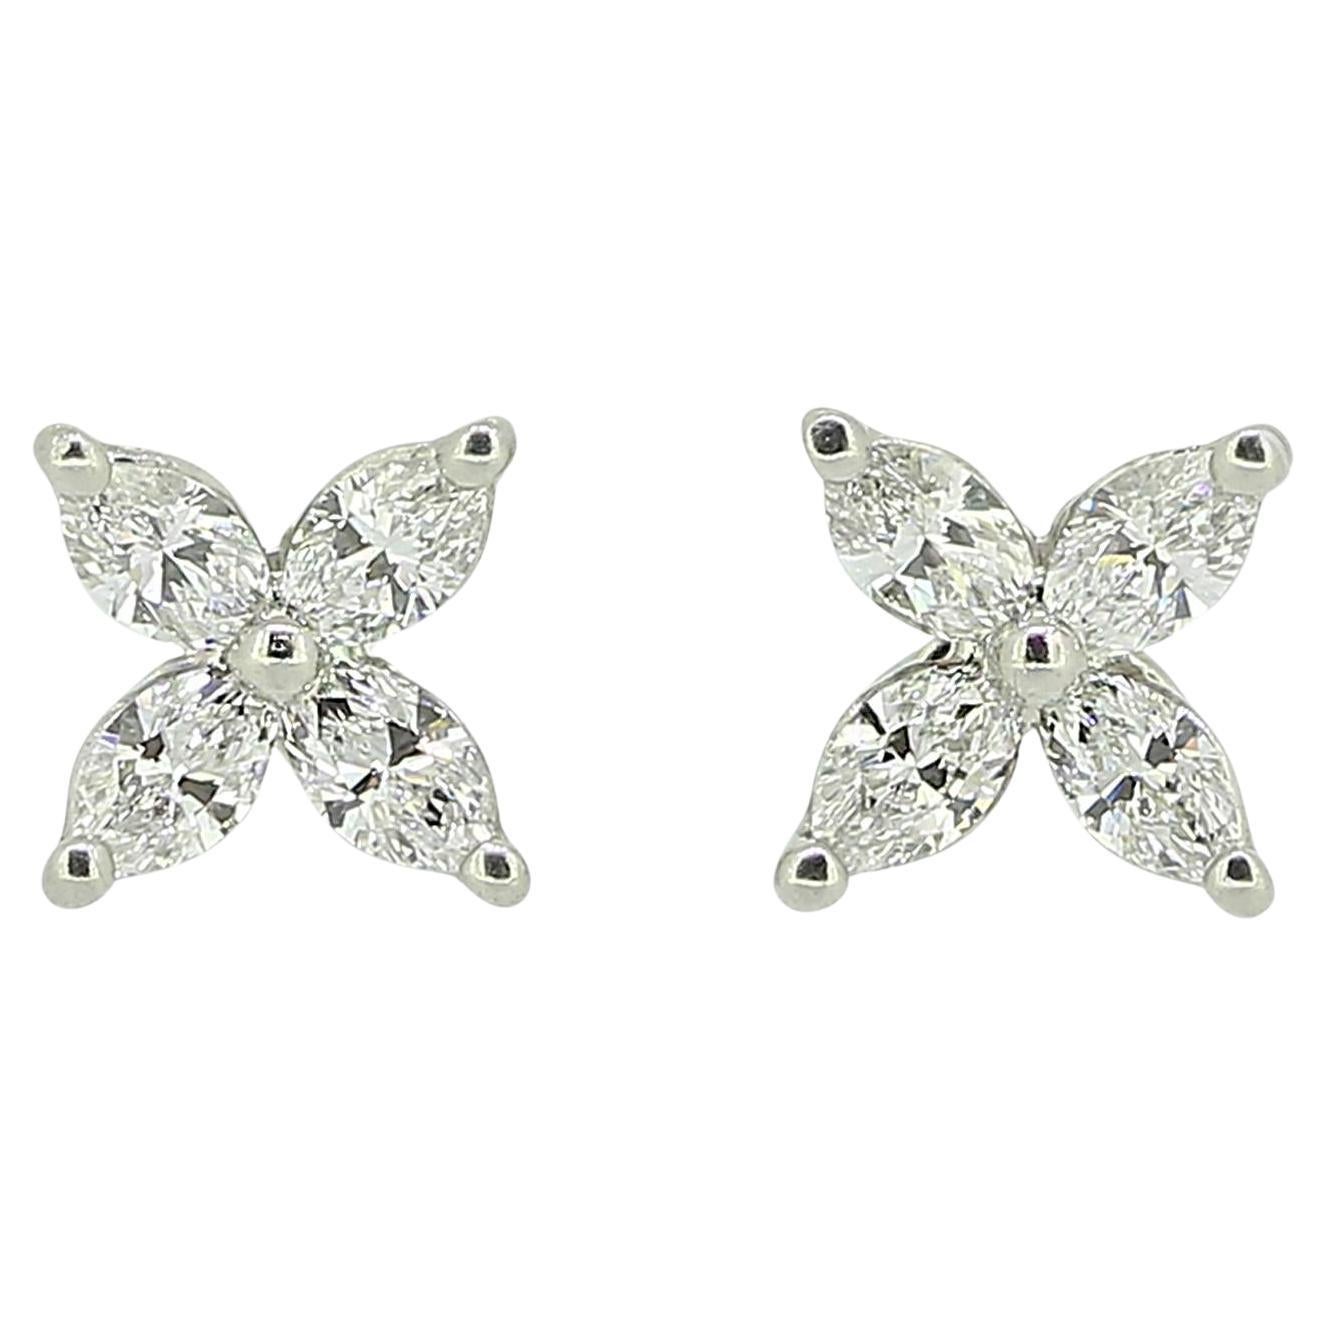 Tiffany & Co. Mini Victoria 0.19 Carat Diamond Earrings